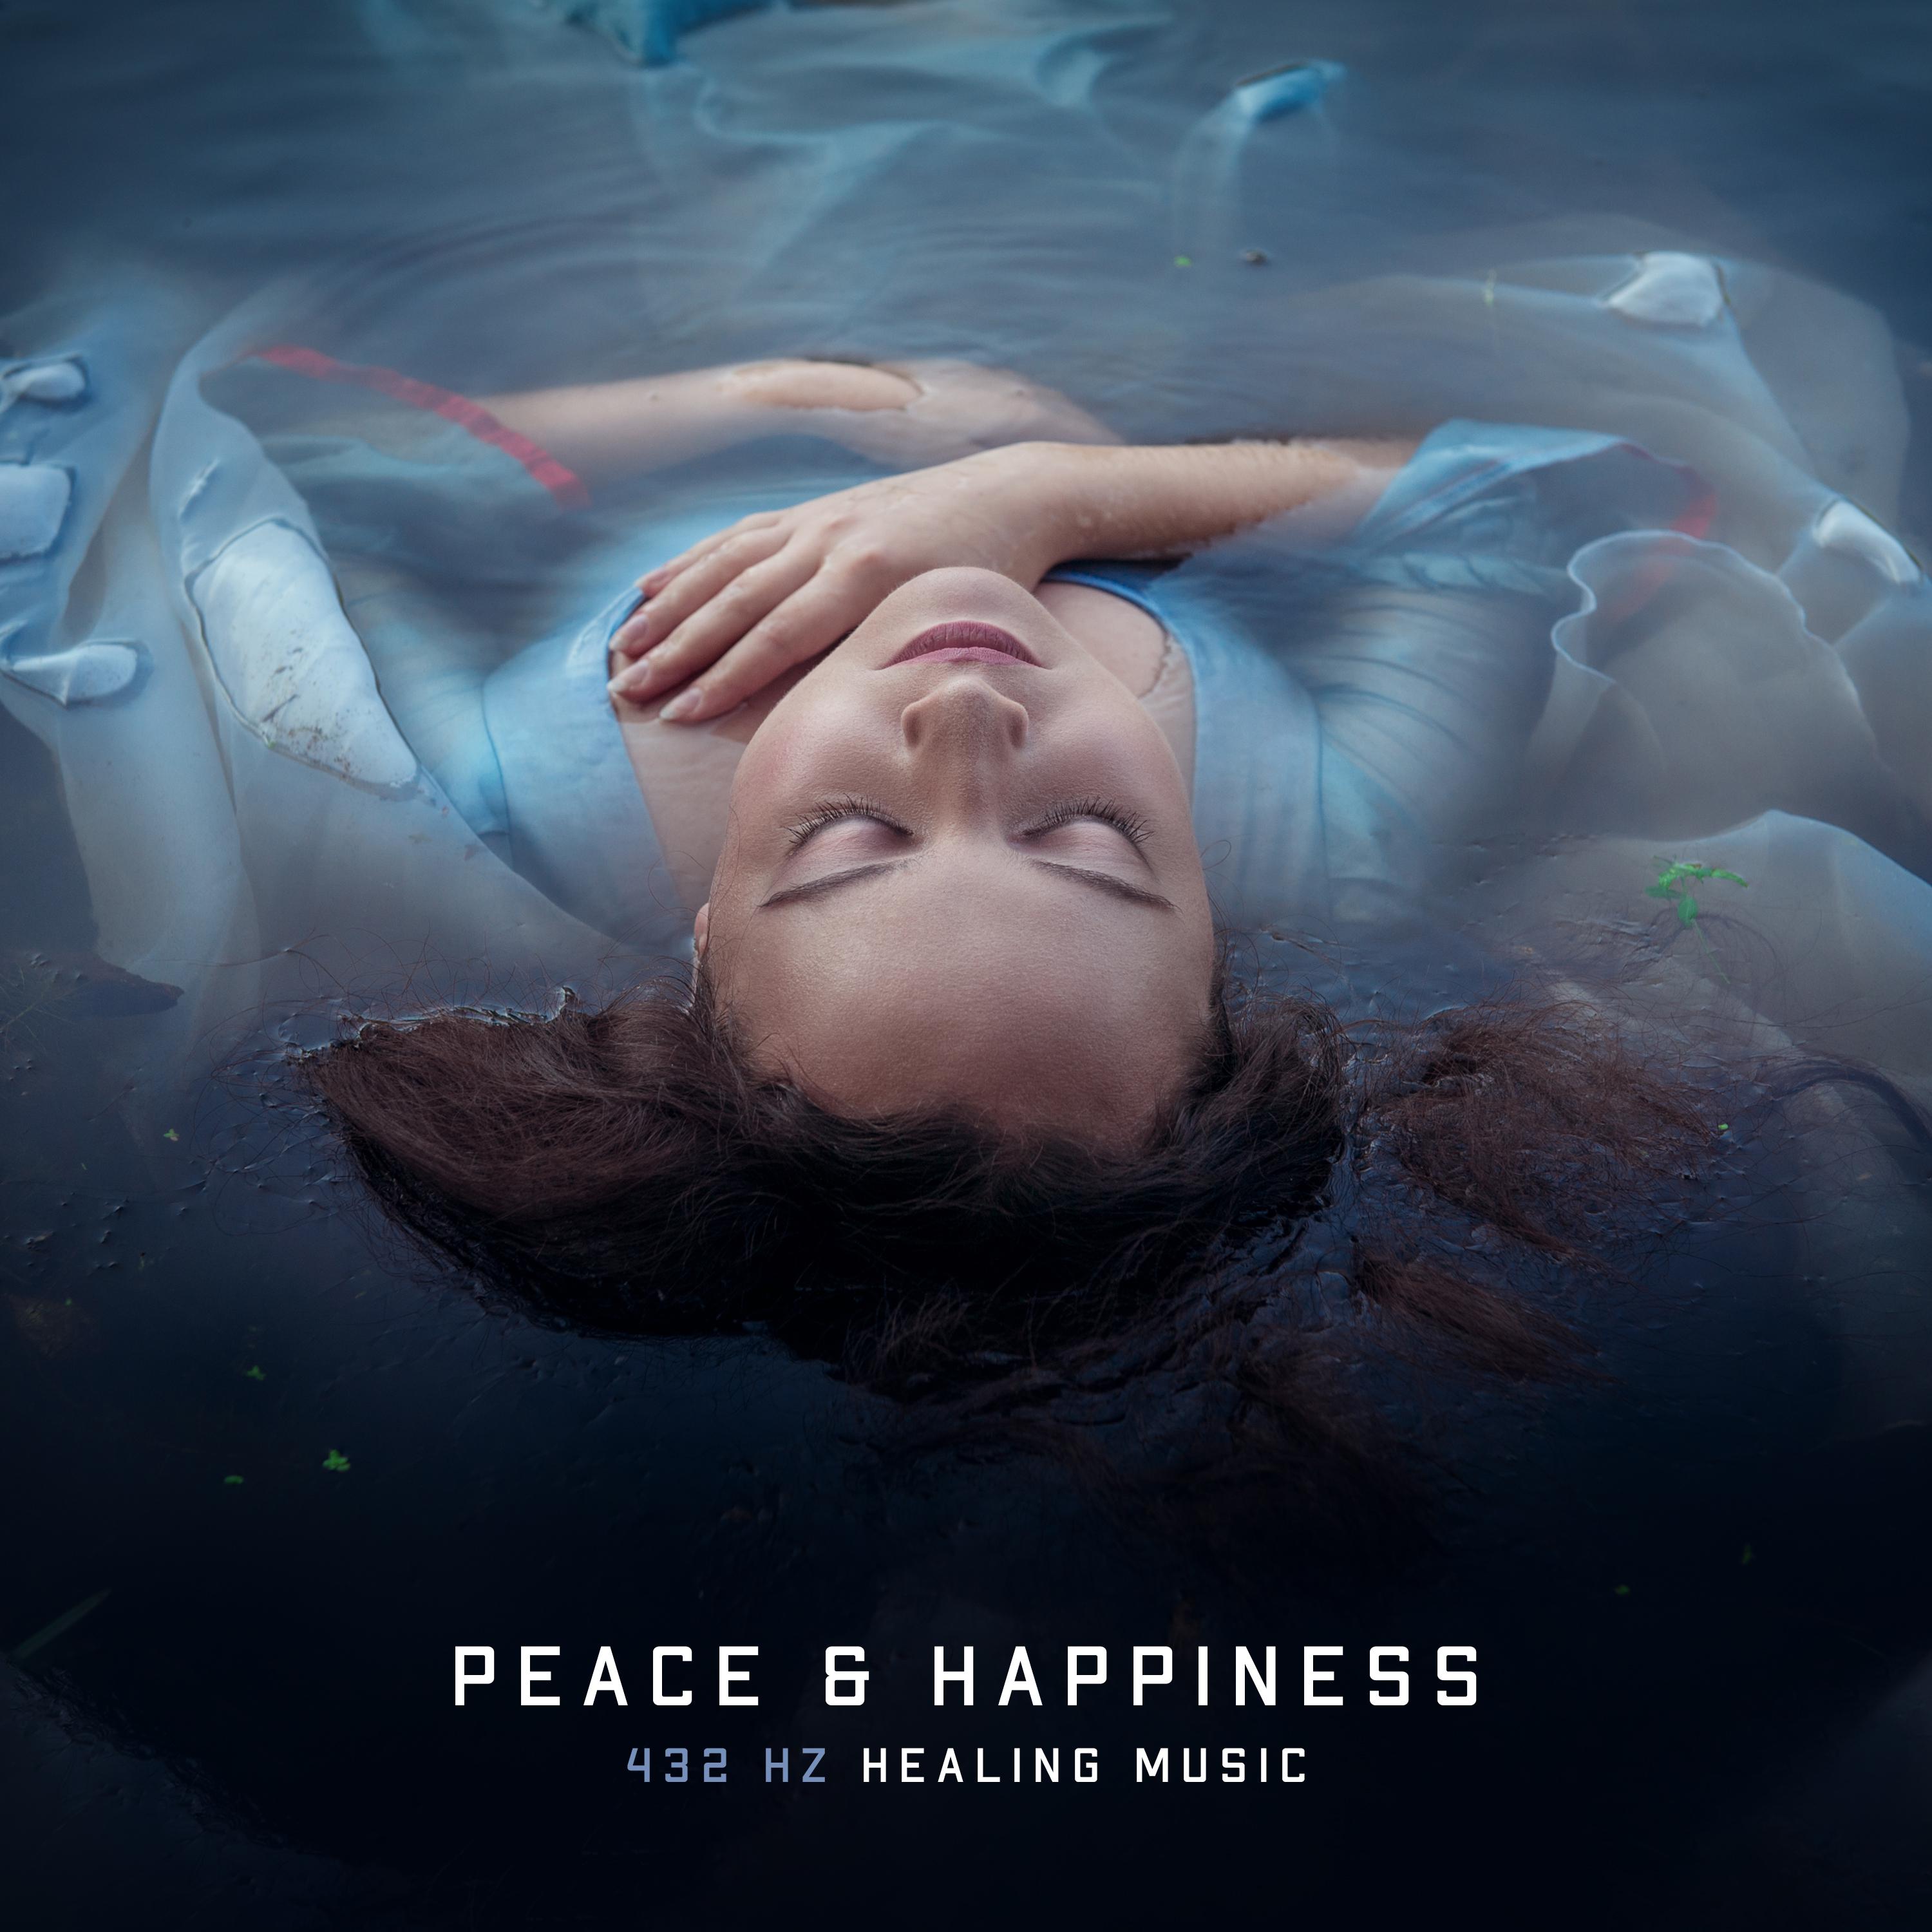 Peace & Happiness (432 Hz Healing Music)